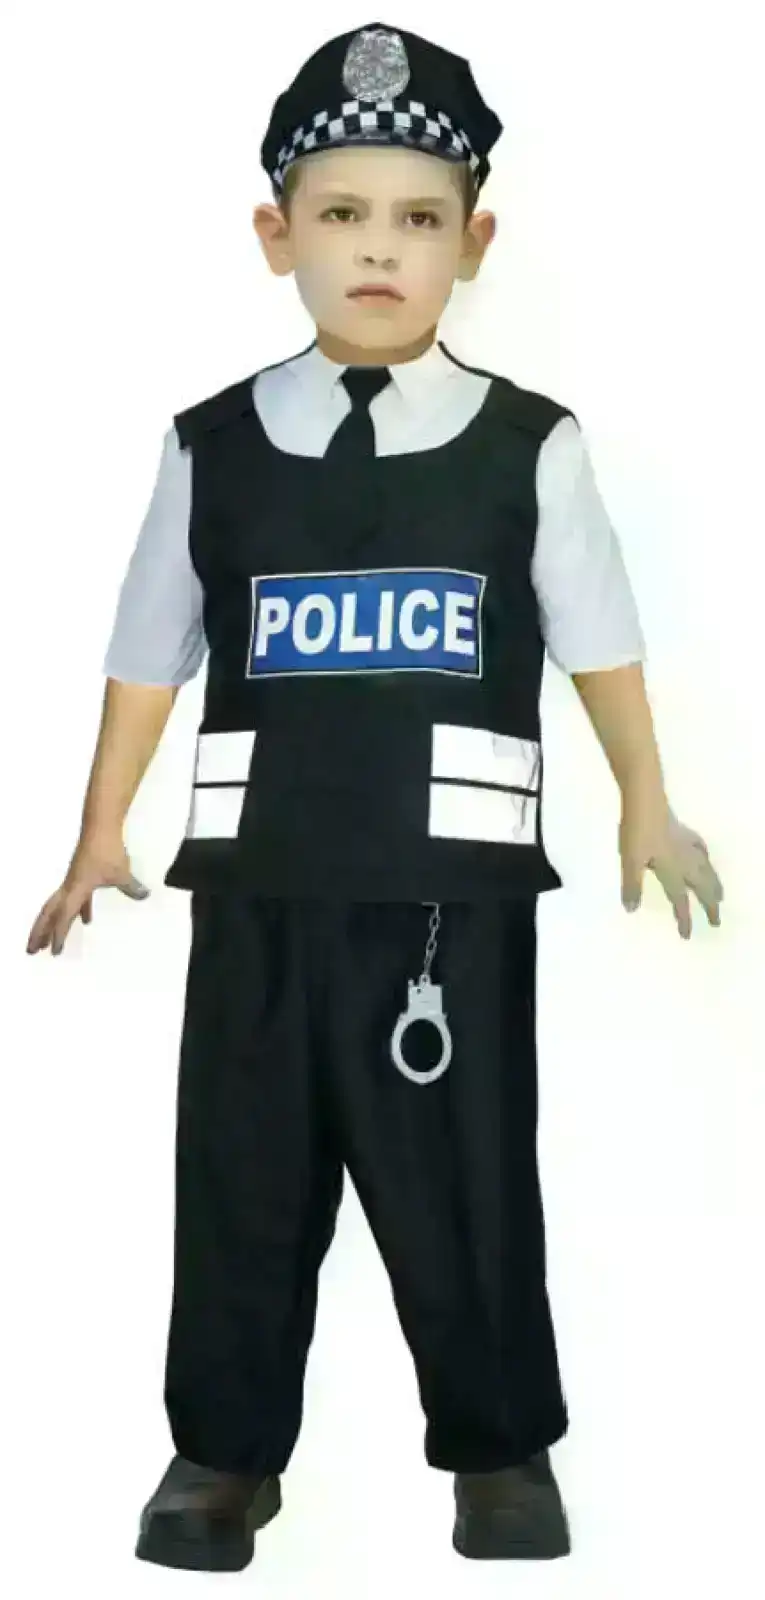 Deluxe Boys Police Costume Book Week Childrens Halloween Fancy Dress Kids